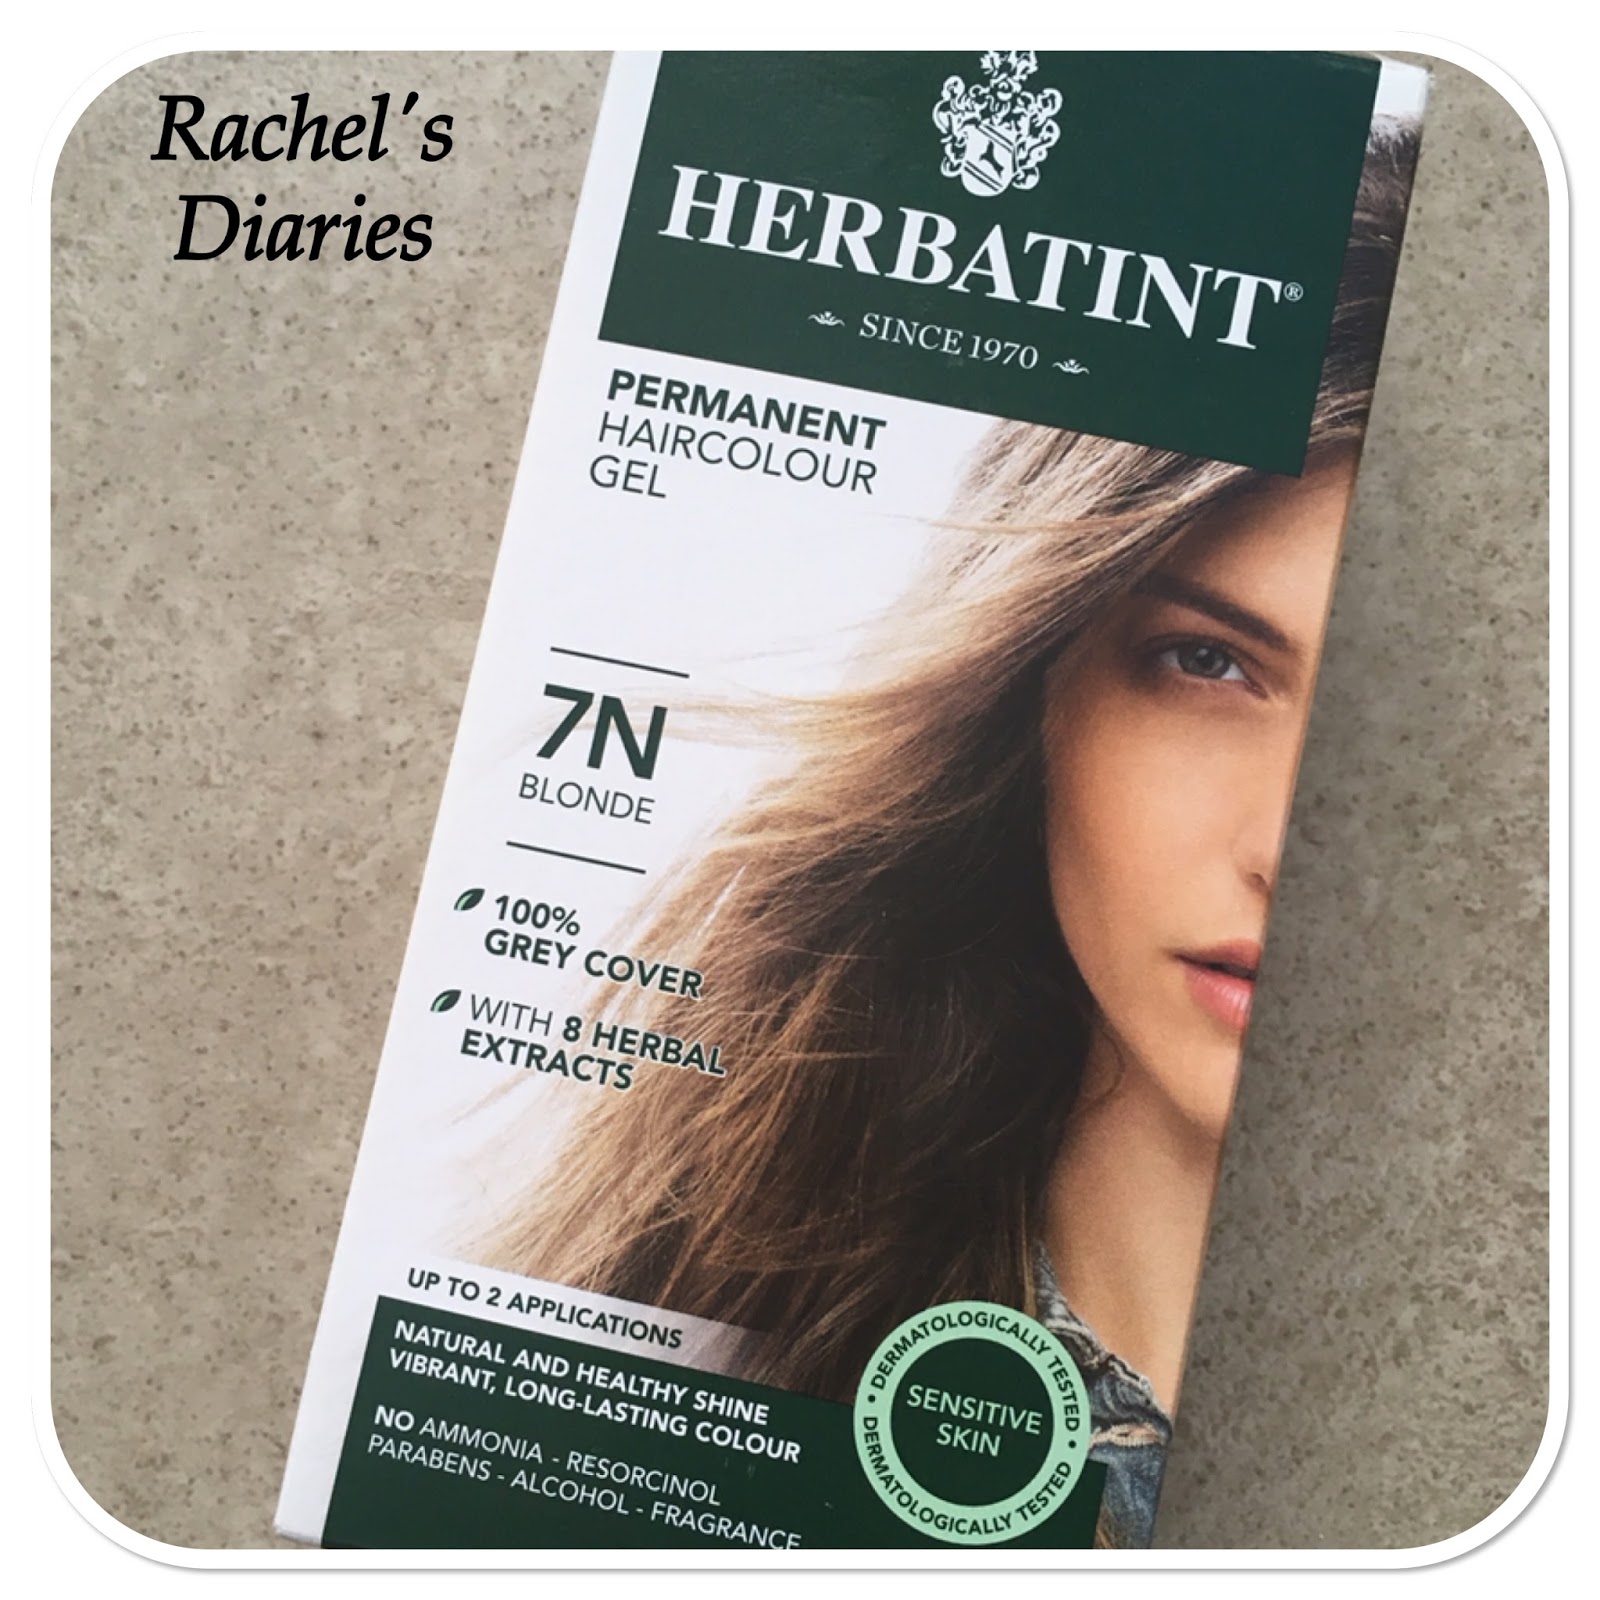 Rachel's Diaries: Review | Herbatint Permanent Hair Colour - 7N Blonde